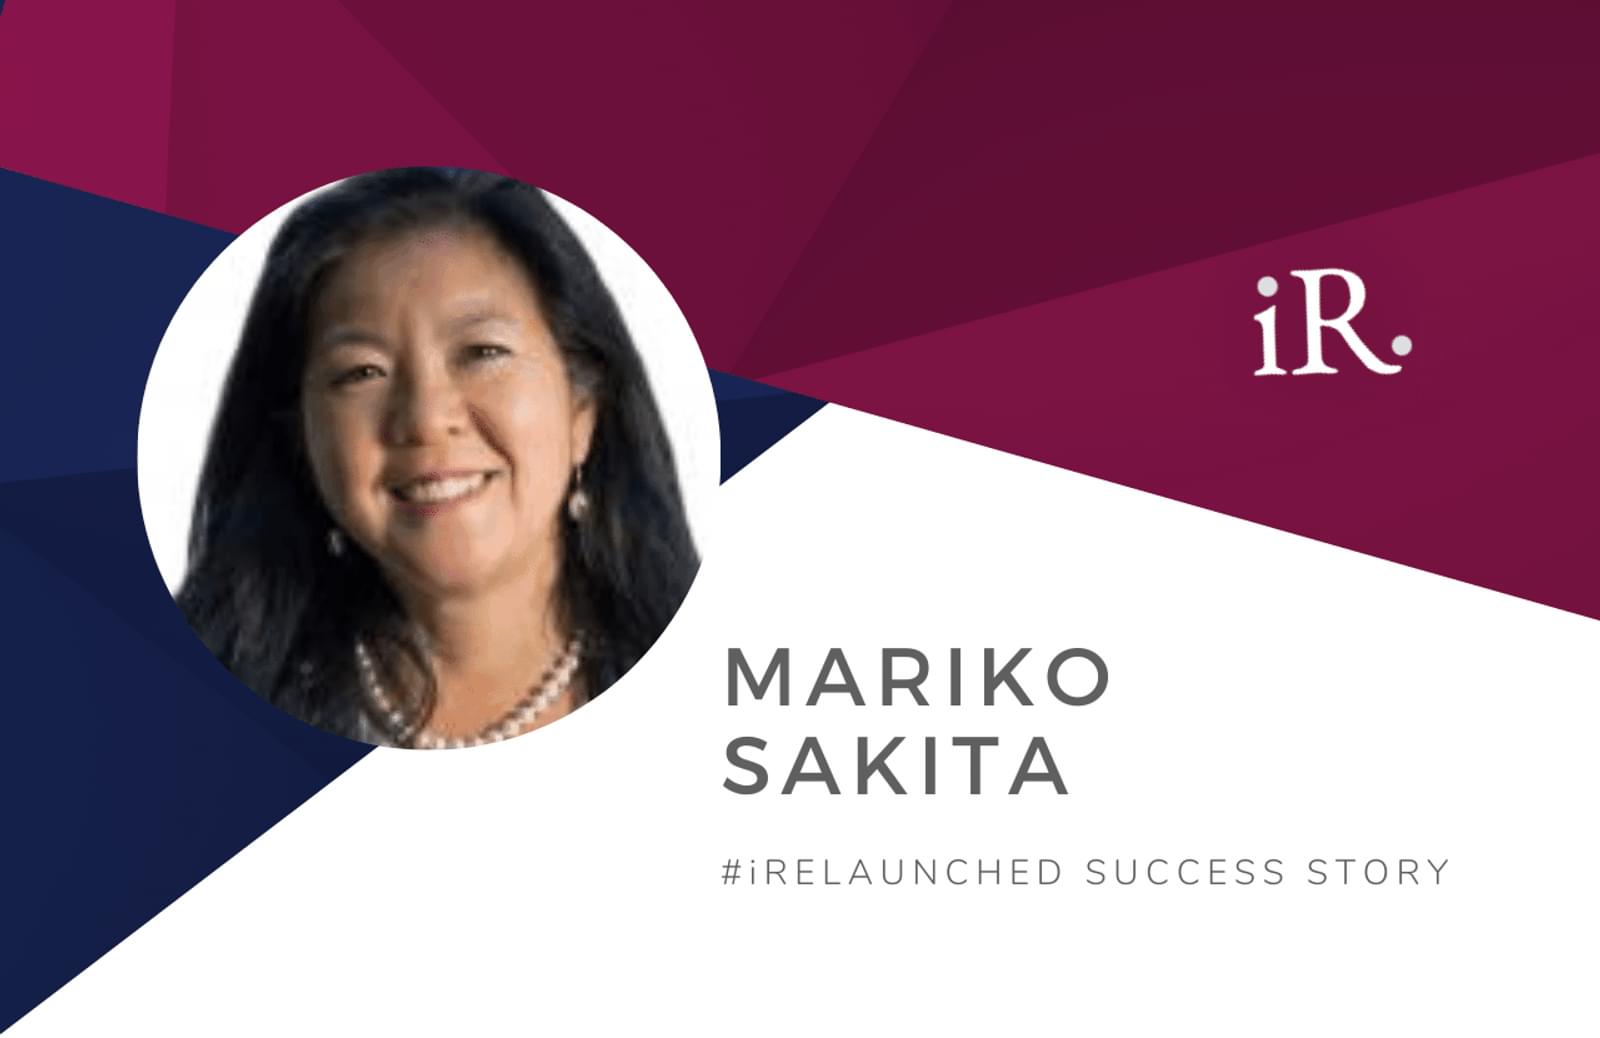 Mariko Sakita's headshot and the text #iRelaunched Success Story along with the iRelaunch logo.  A navy and maroon geometric textured background intersect behind Mariko's headshot.